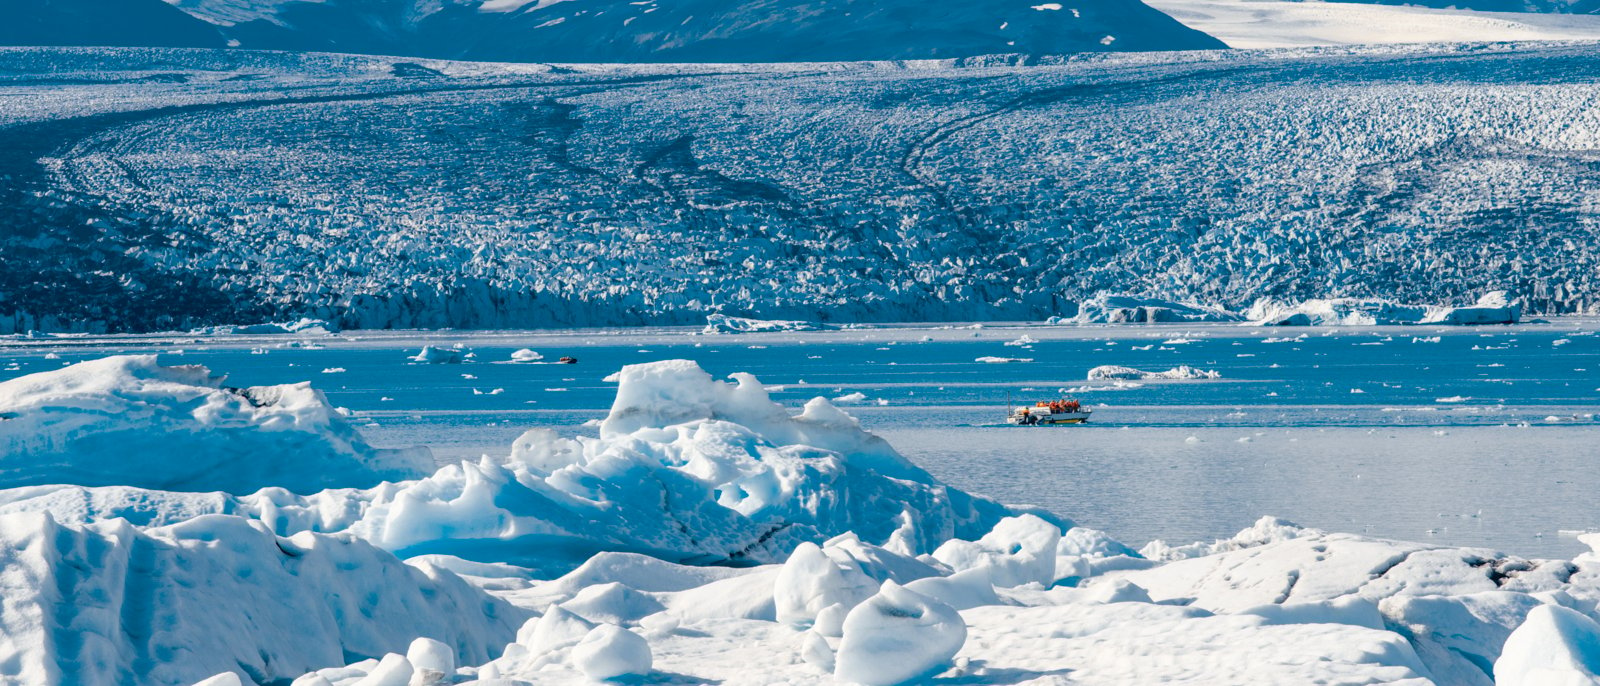 Vatnajokull glacier at Jokulsarlon. Vatnajokull is one of the largest glaciers in Europe